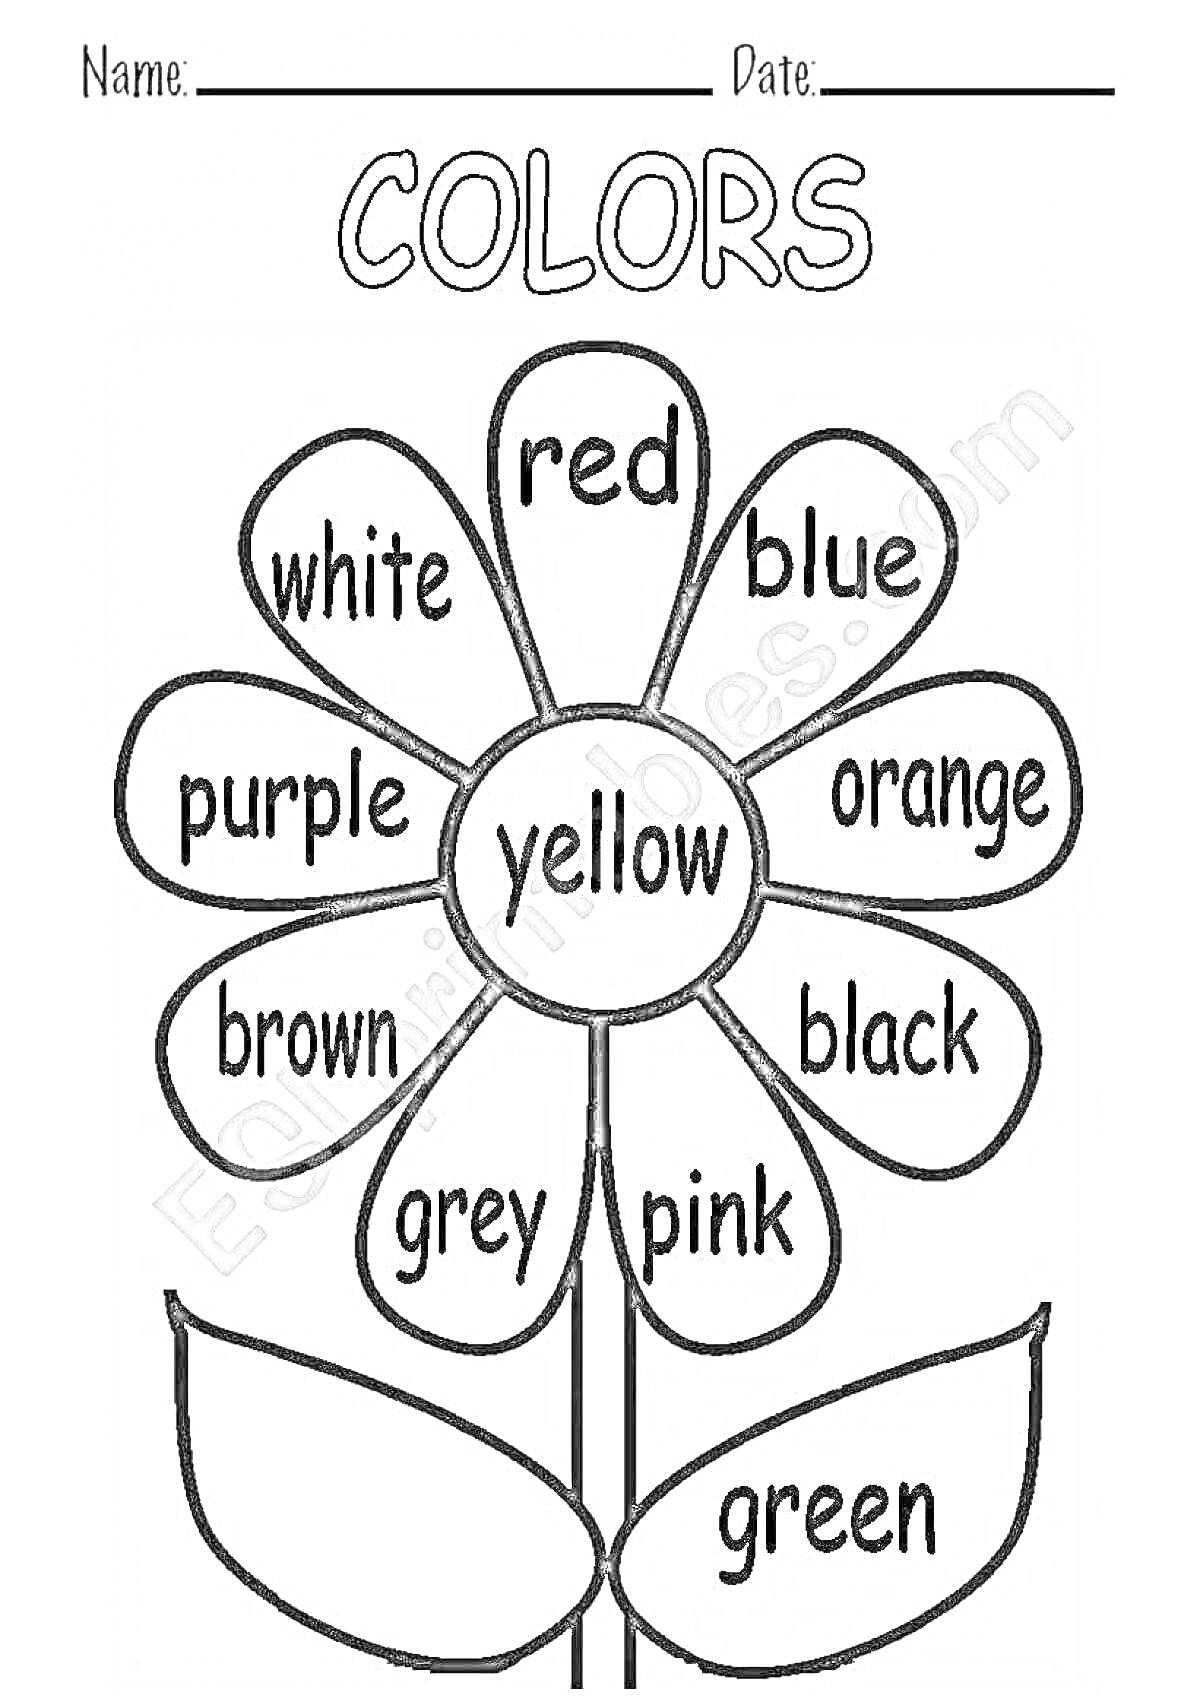 Раскраска Цветок с цветами, написанными на английском языке для 2 класса. Названия цветов: white, red, blue, orange, purple, yellow, black, brown, grey, pink, green.